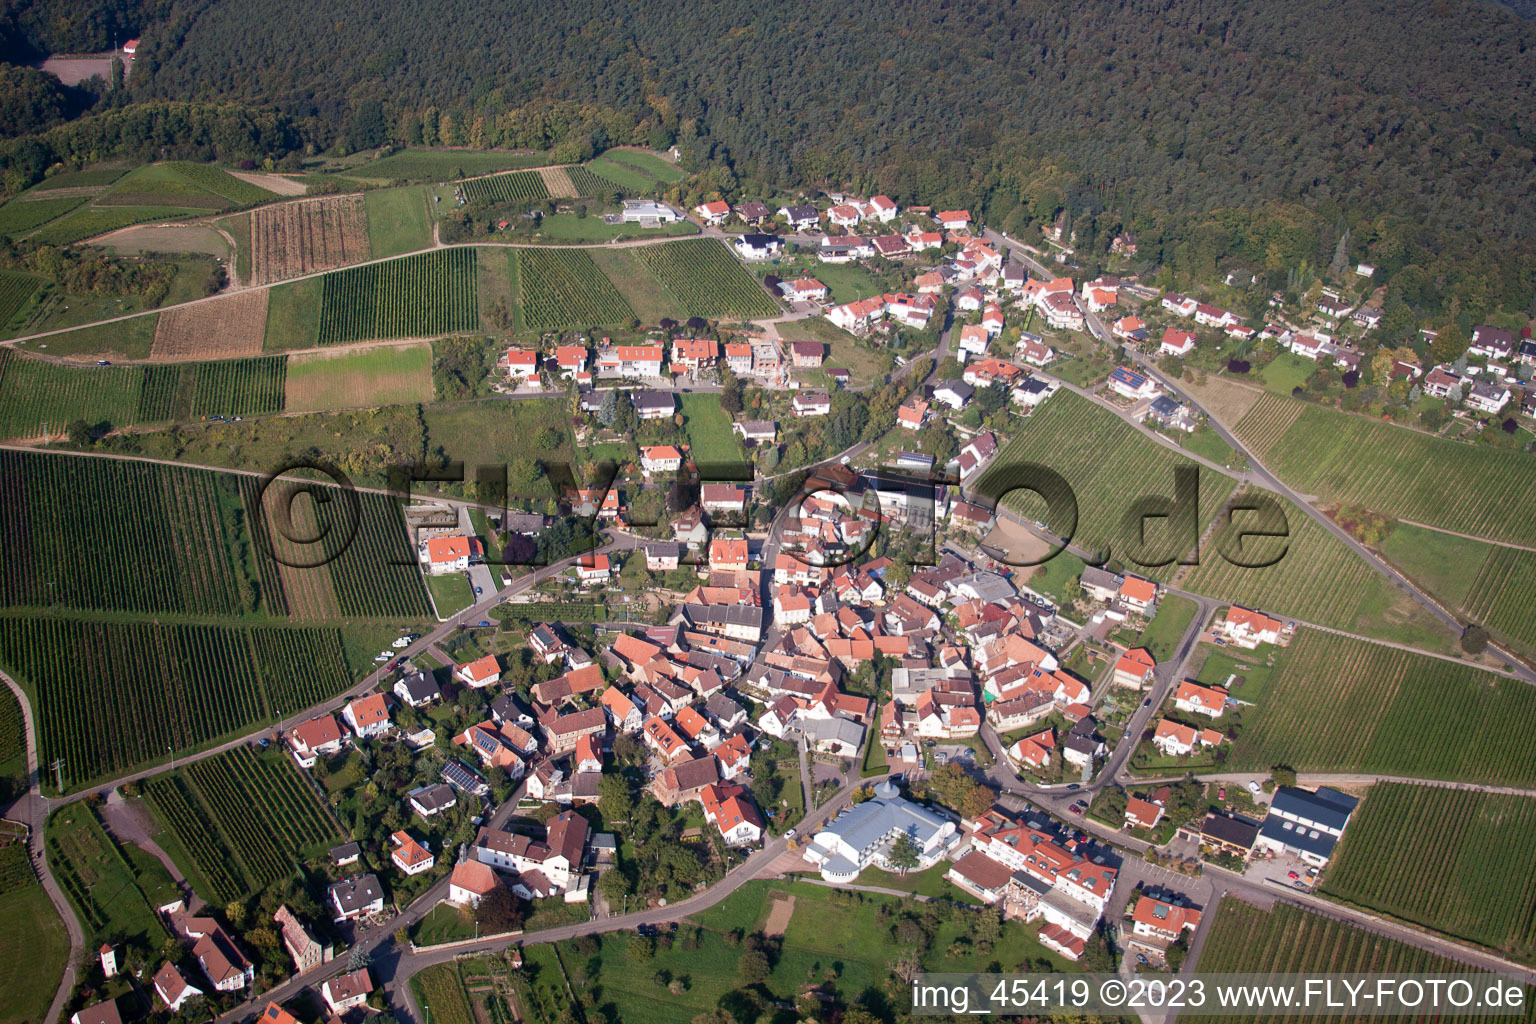 District Gleiszellen in Gleiszellen-Gleishorbach in the state Rhineland-Palatinate, Germany seen from above